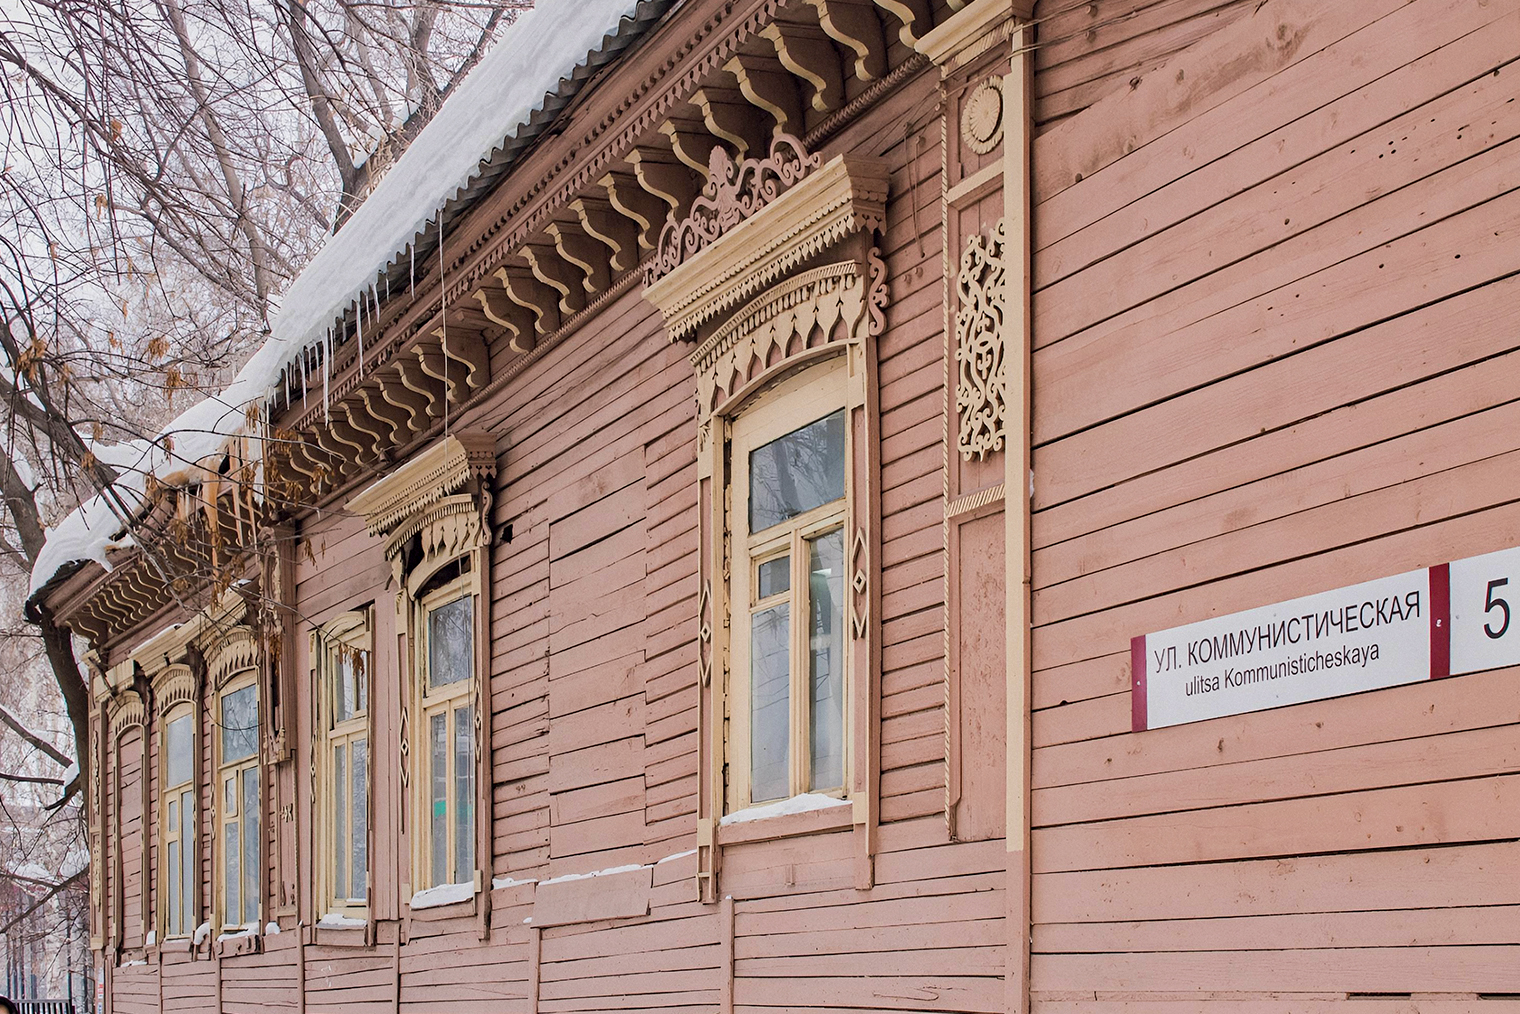 Фасад дома Кожевникова. Источник: drugoigorod.ru